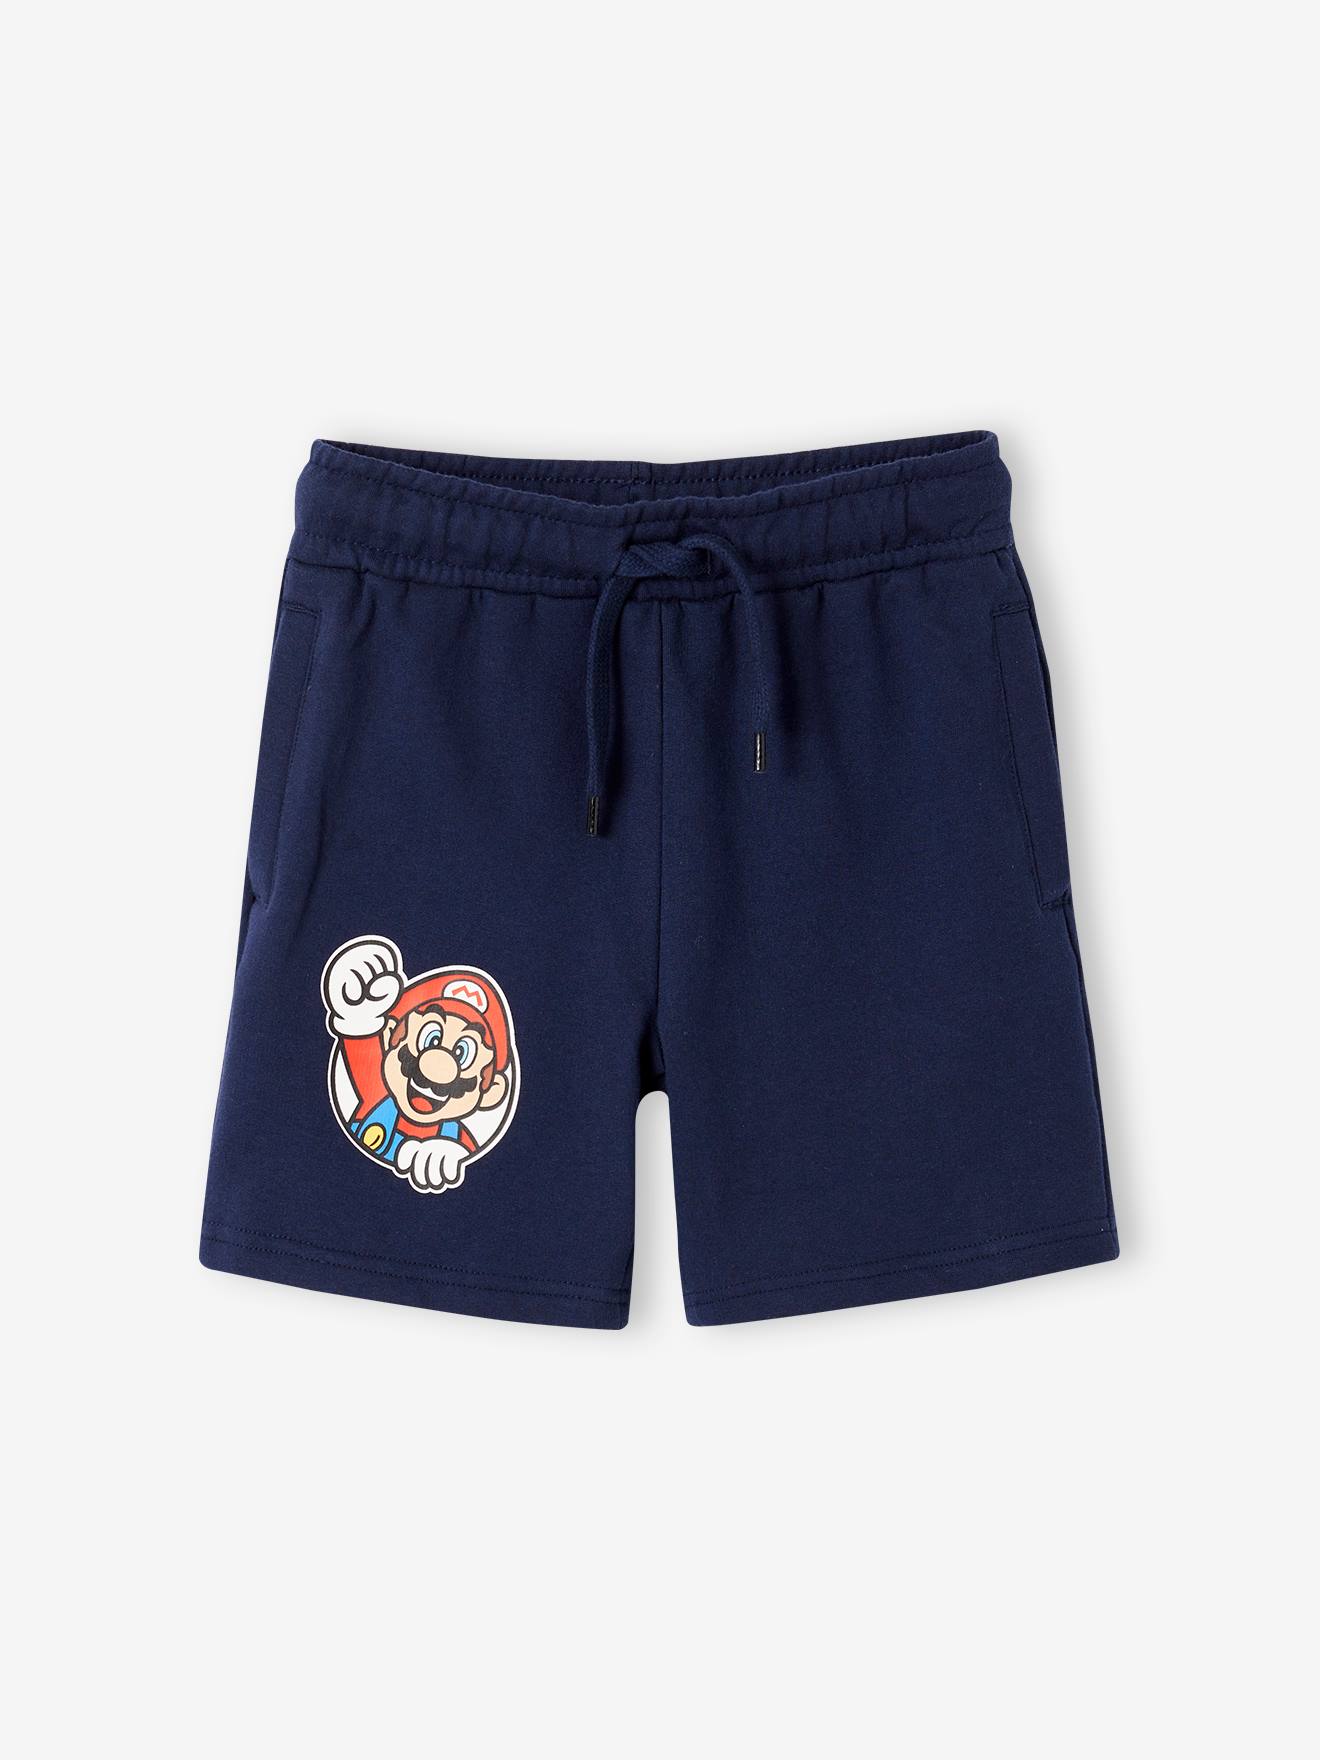 Bermuda Shorts for Boys, Super Mario(r) navy blue